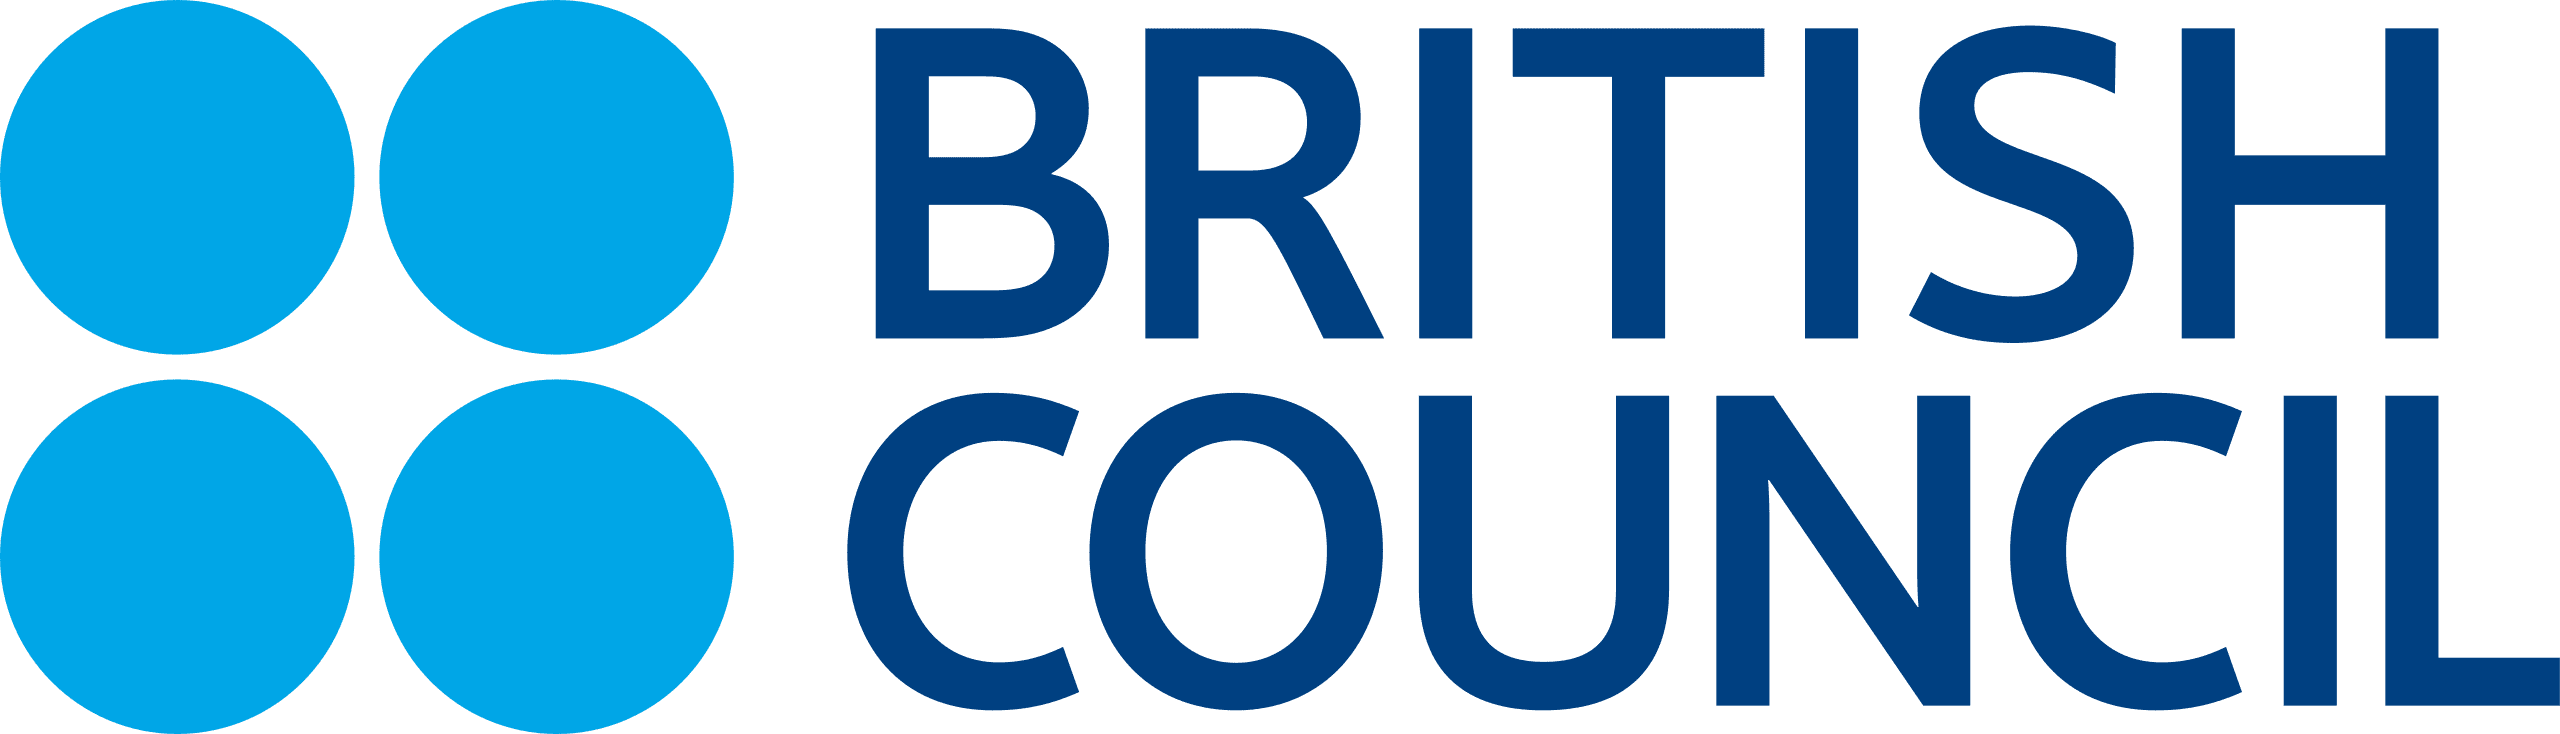 British council accreditation